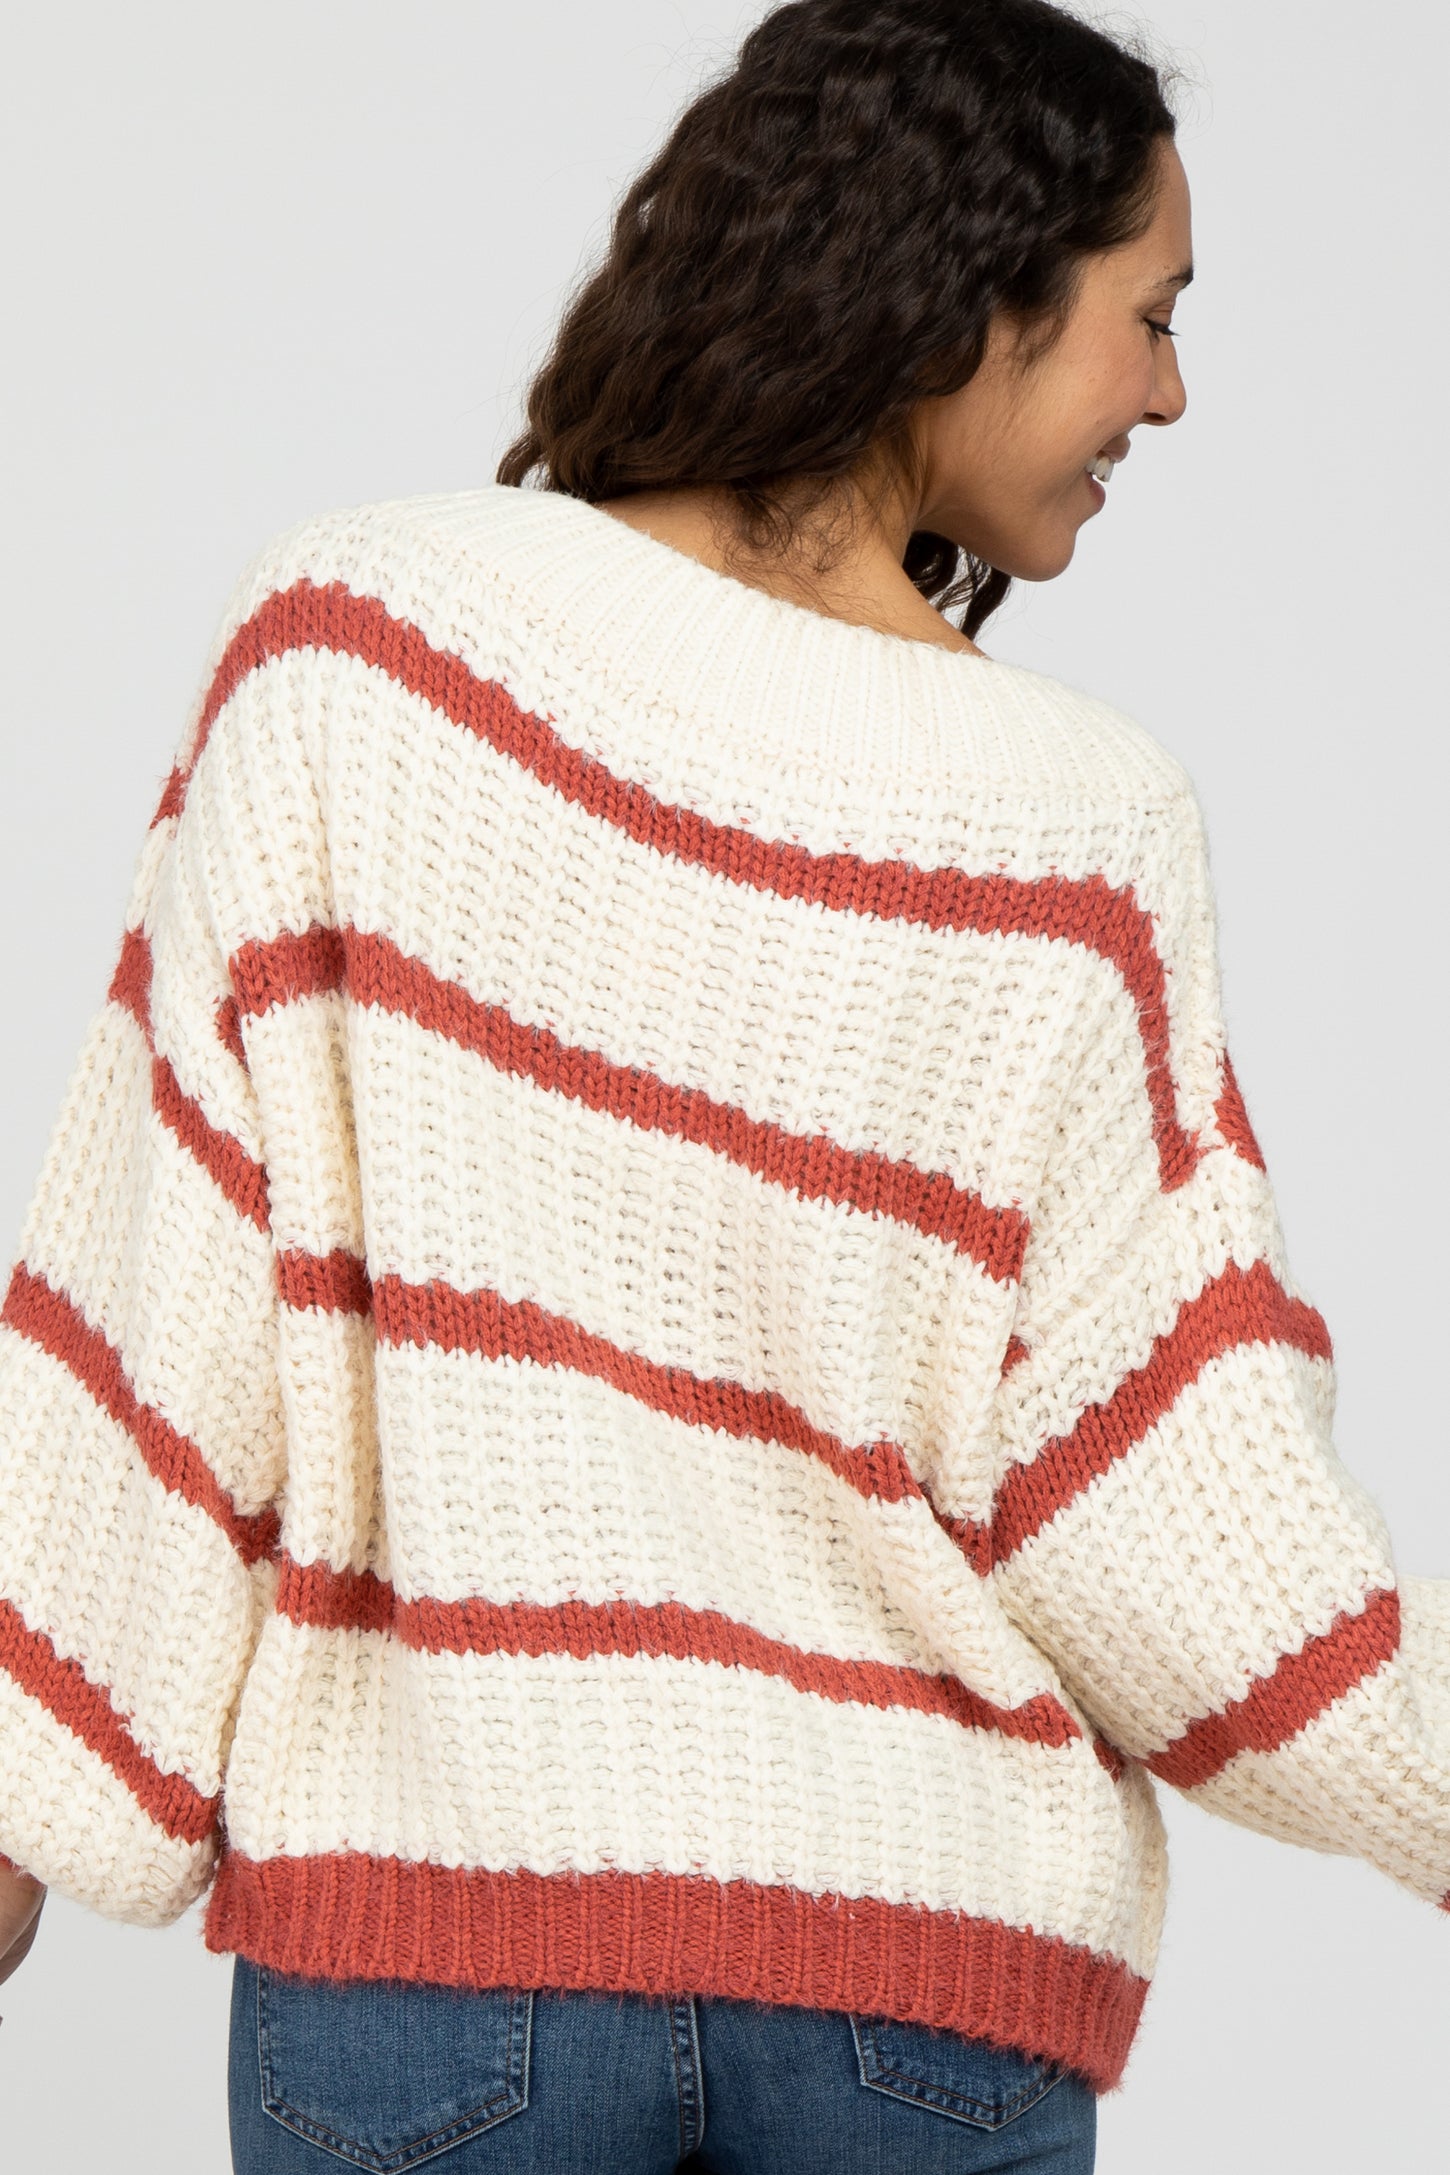 Rust Cream Striped Chunky Knit Sweater